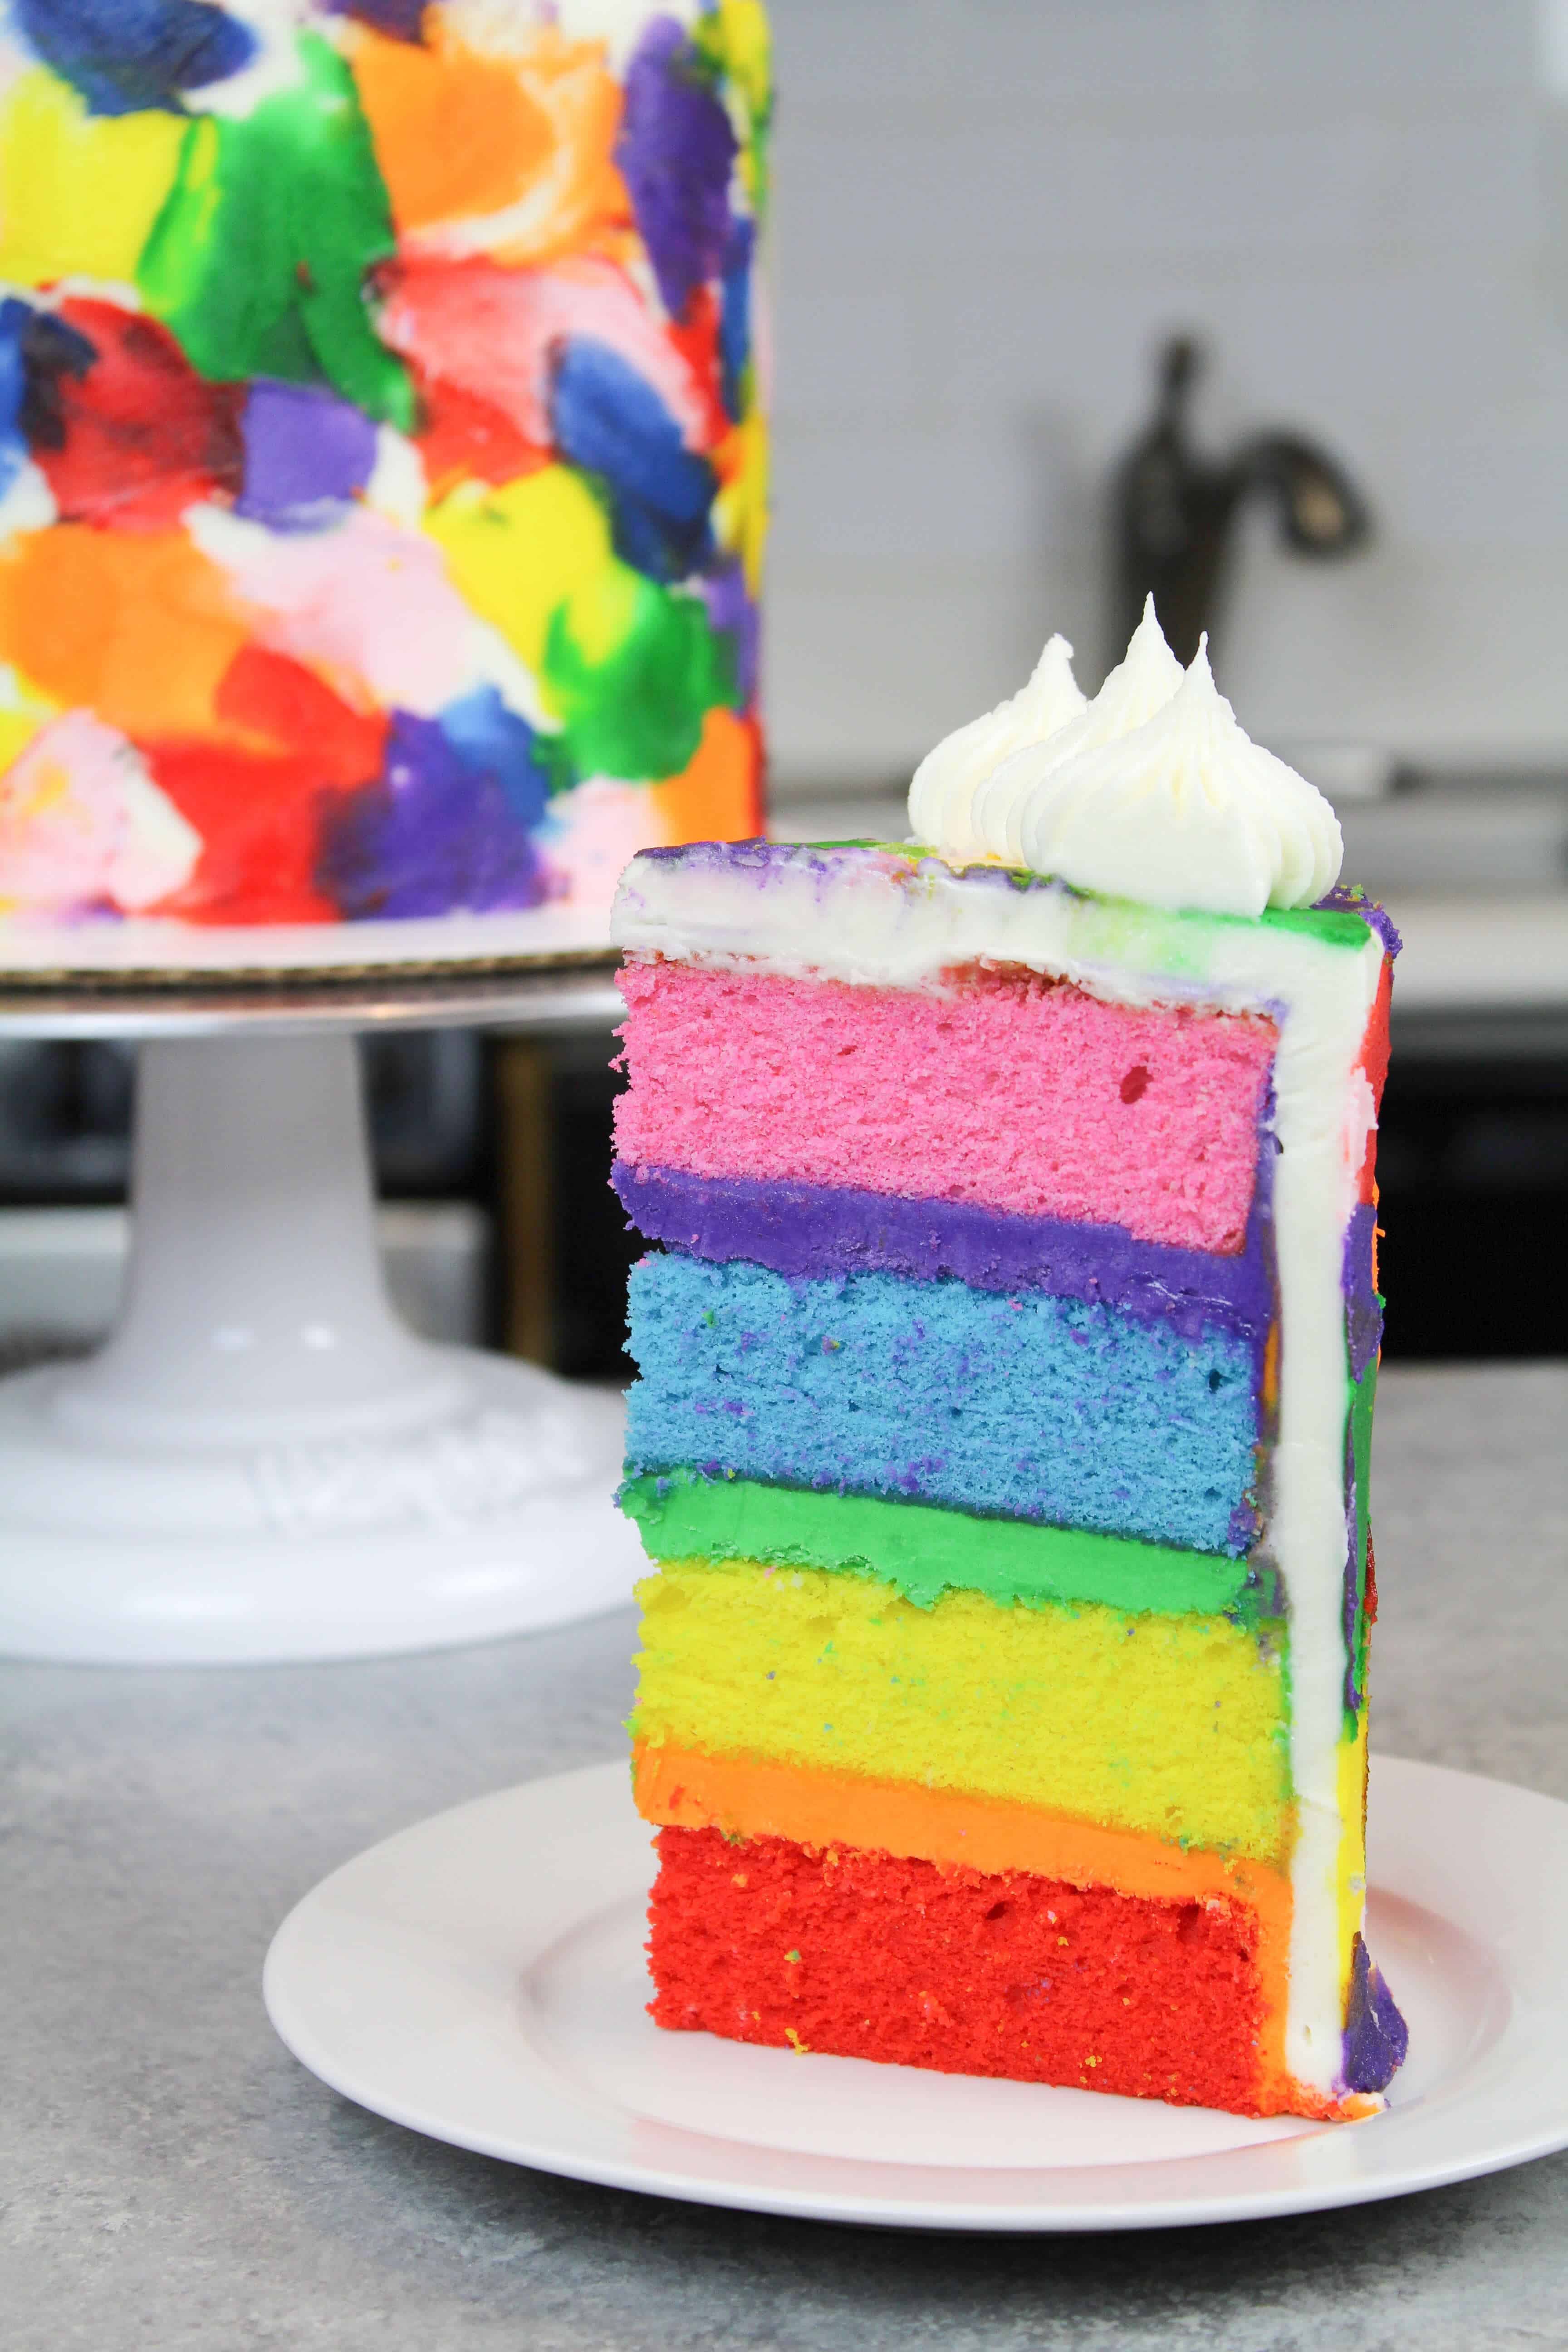 Rainbowr cake recipe | BBC Good Food